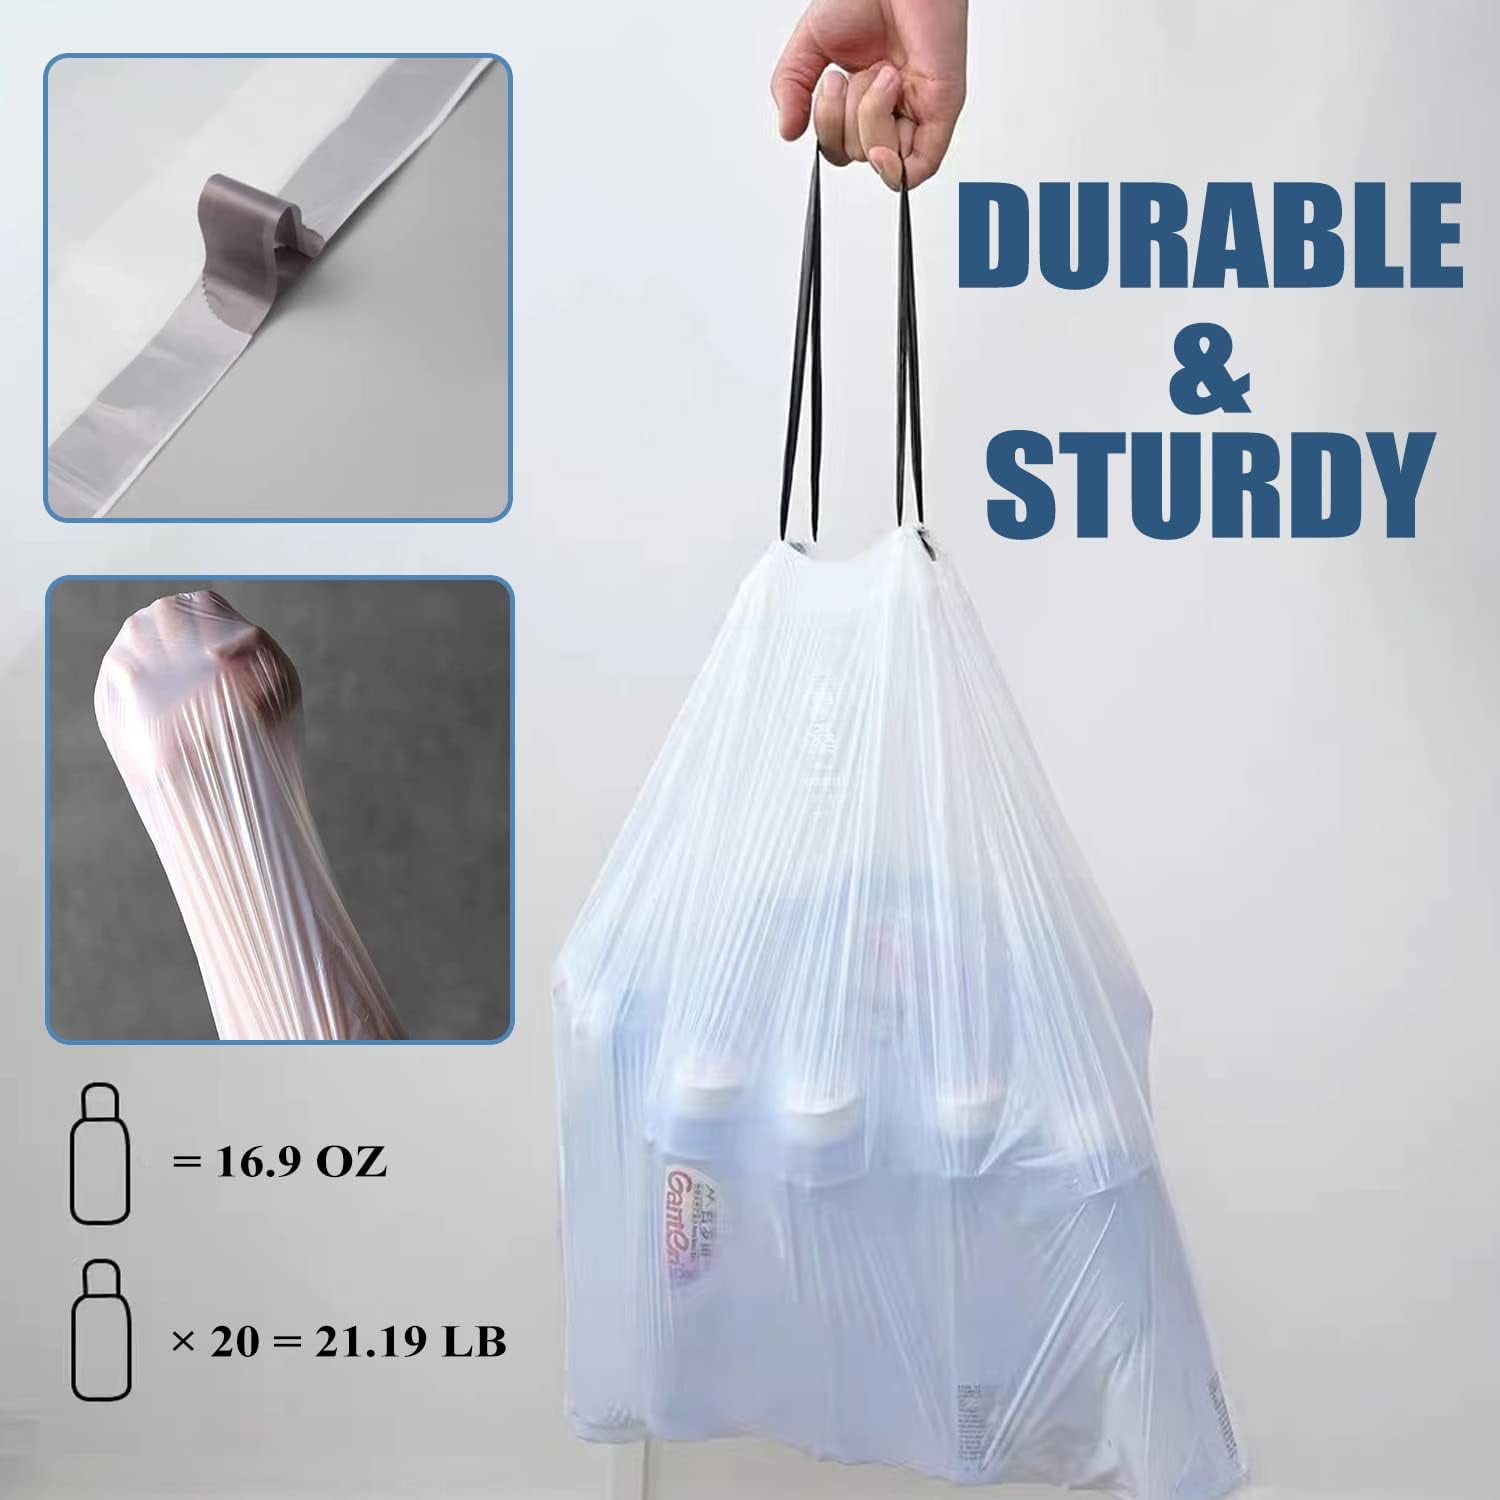 Small Clear 2-4 Gallon Trash Bags (800 Count) Bulk Bathroom Garbage Ba –  shopmese